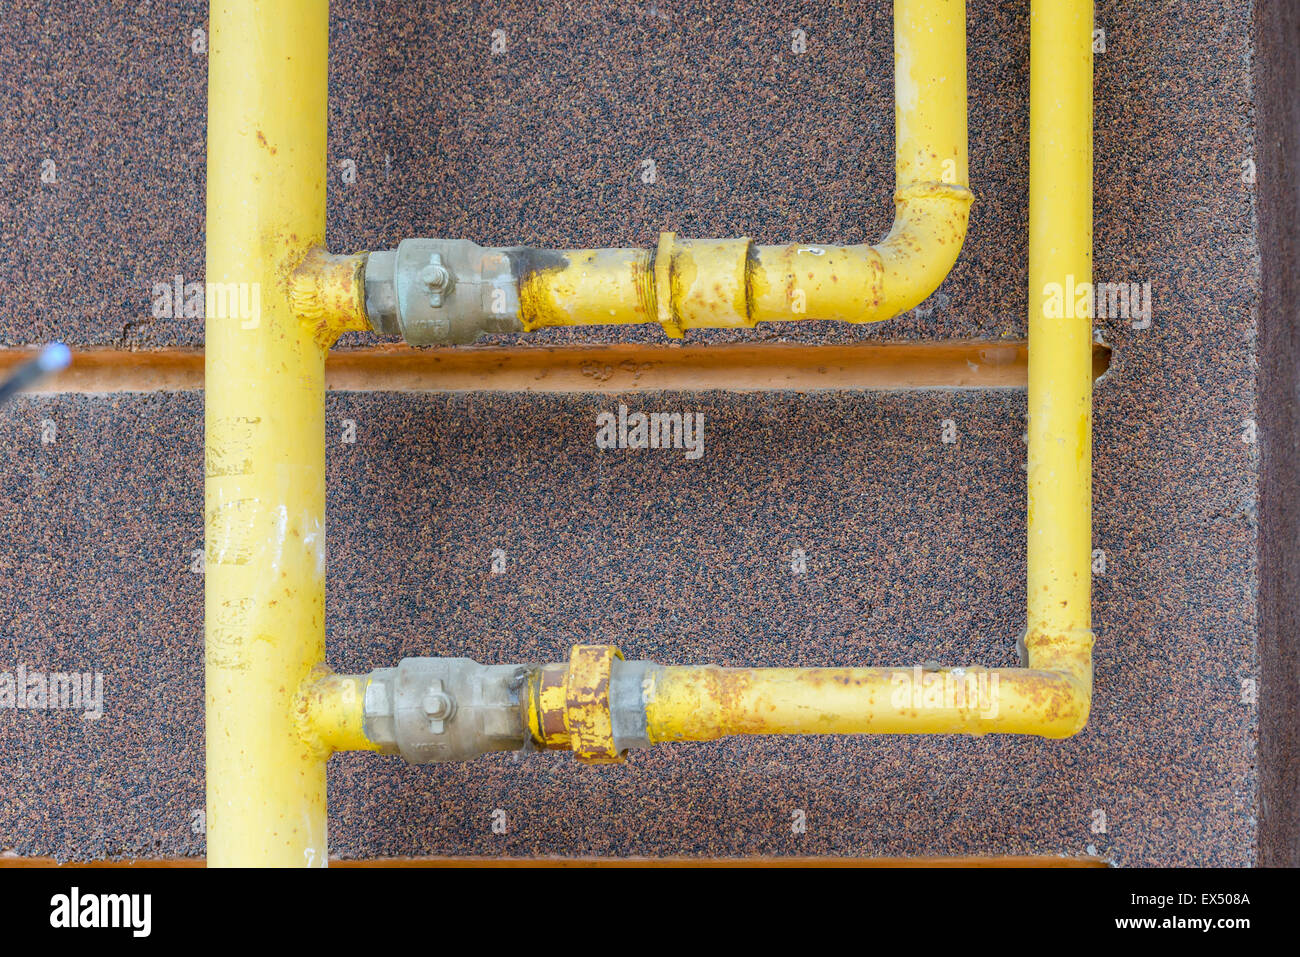 Banzai Nublado sangrado Tubo de gas fotografías e imágenes de alta resolución - Alamy